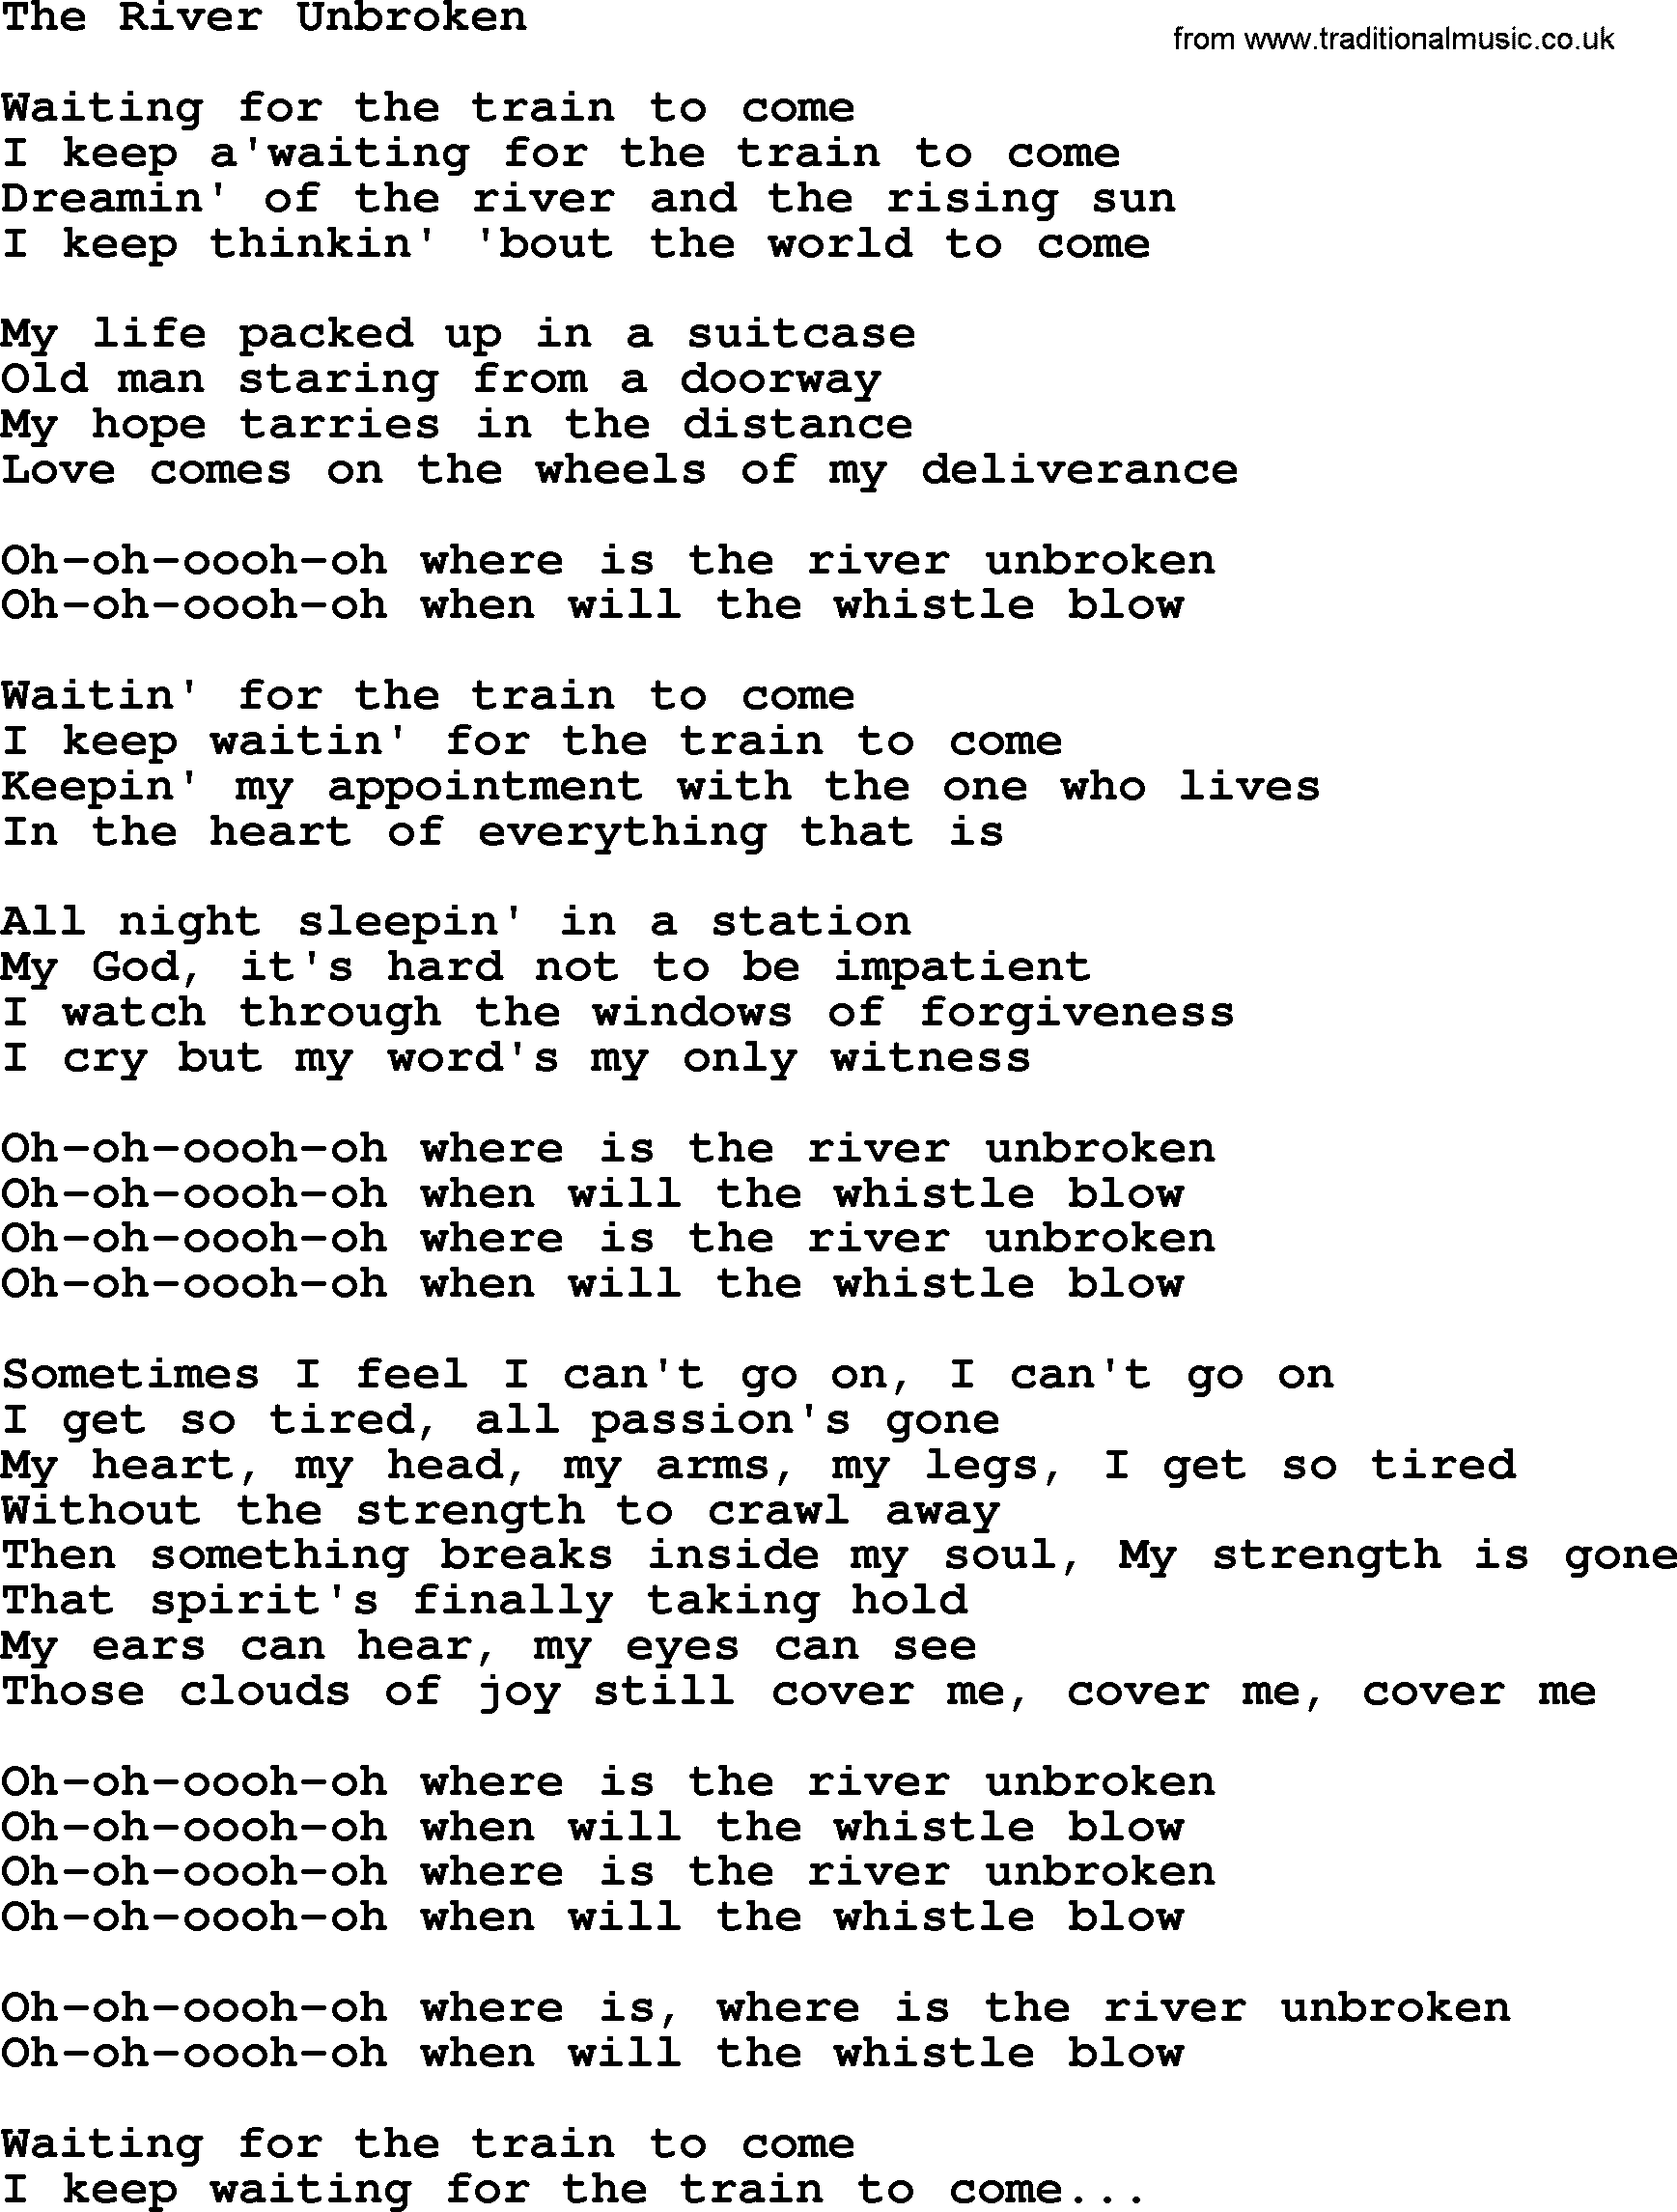 Dolly Parton song The River Unbroken.txt lyrics